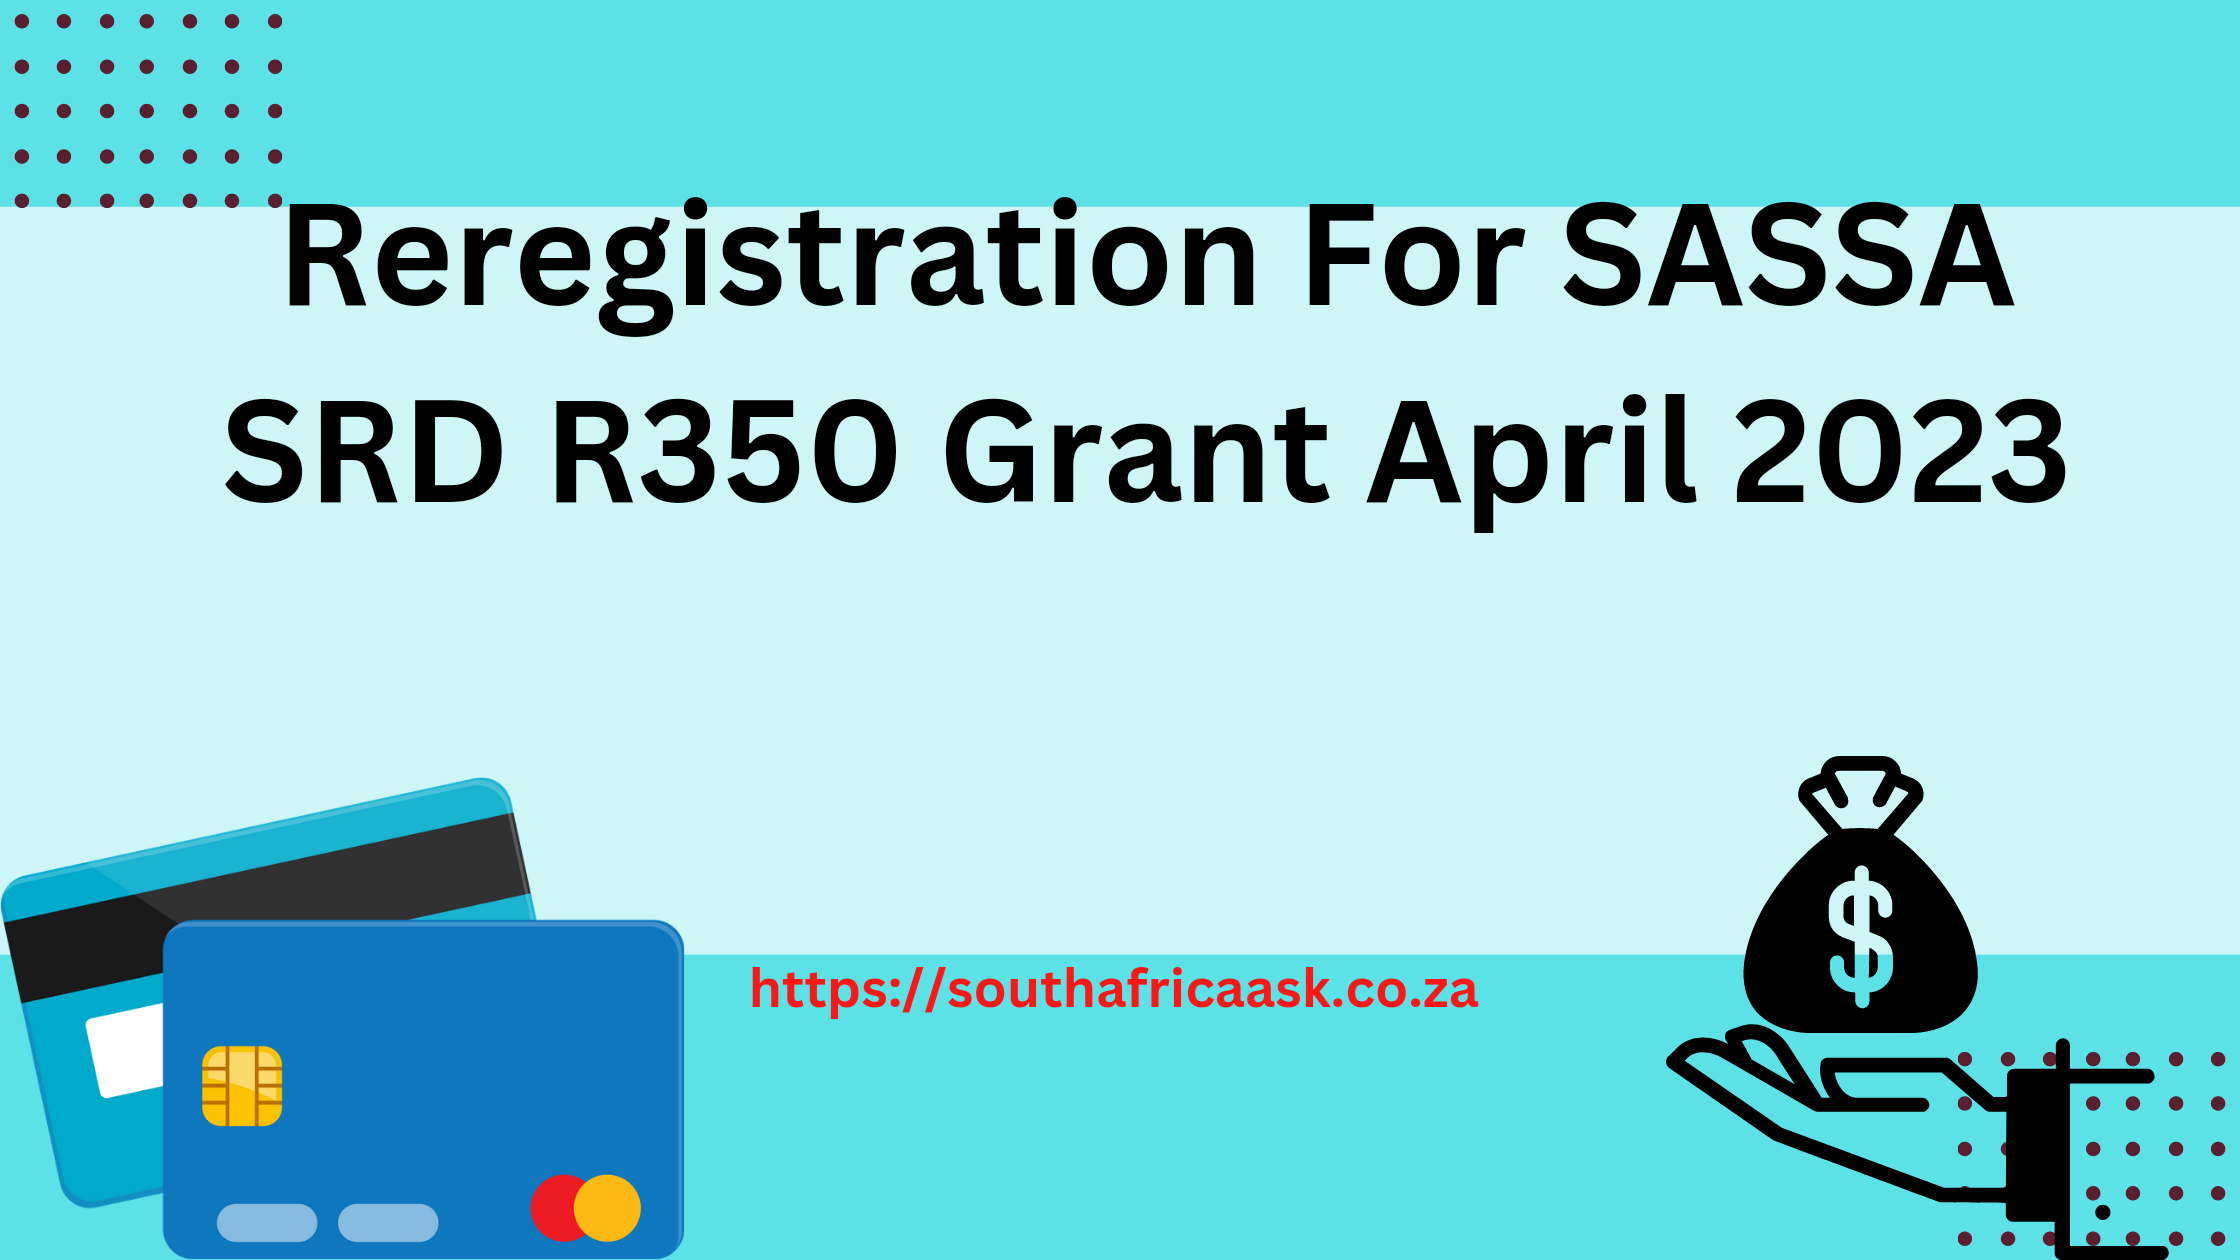 Reregistration For SASSA SRD R350 Grant April 2023